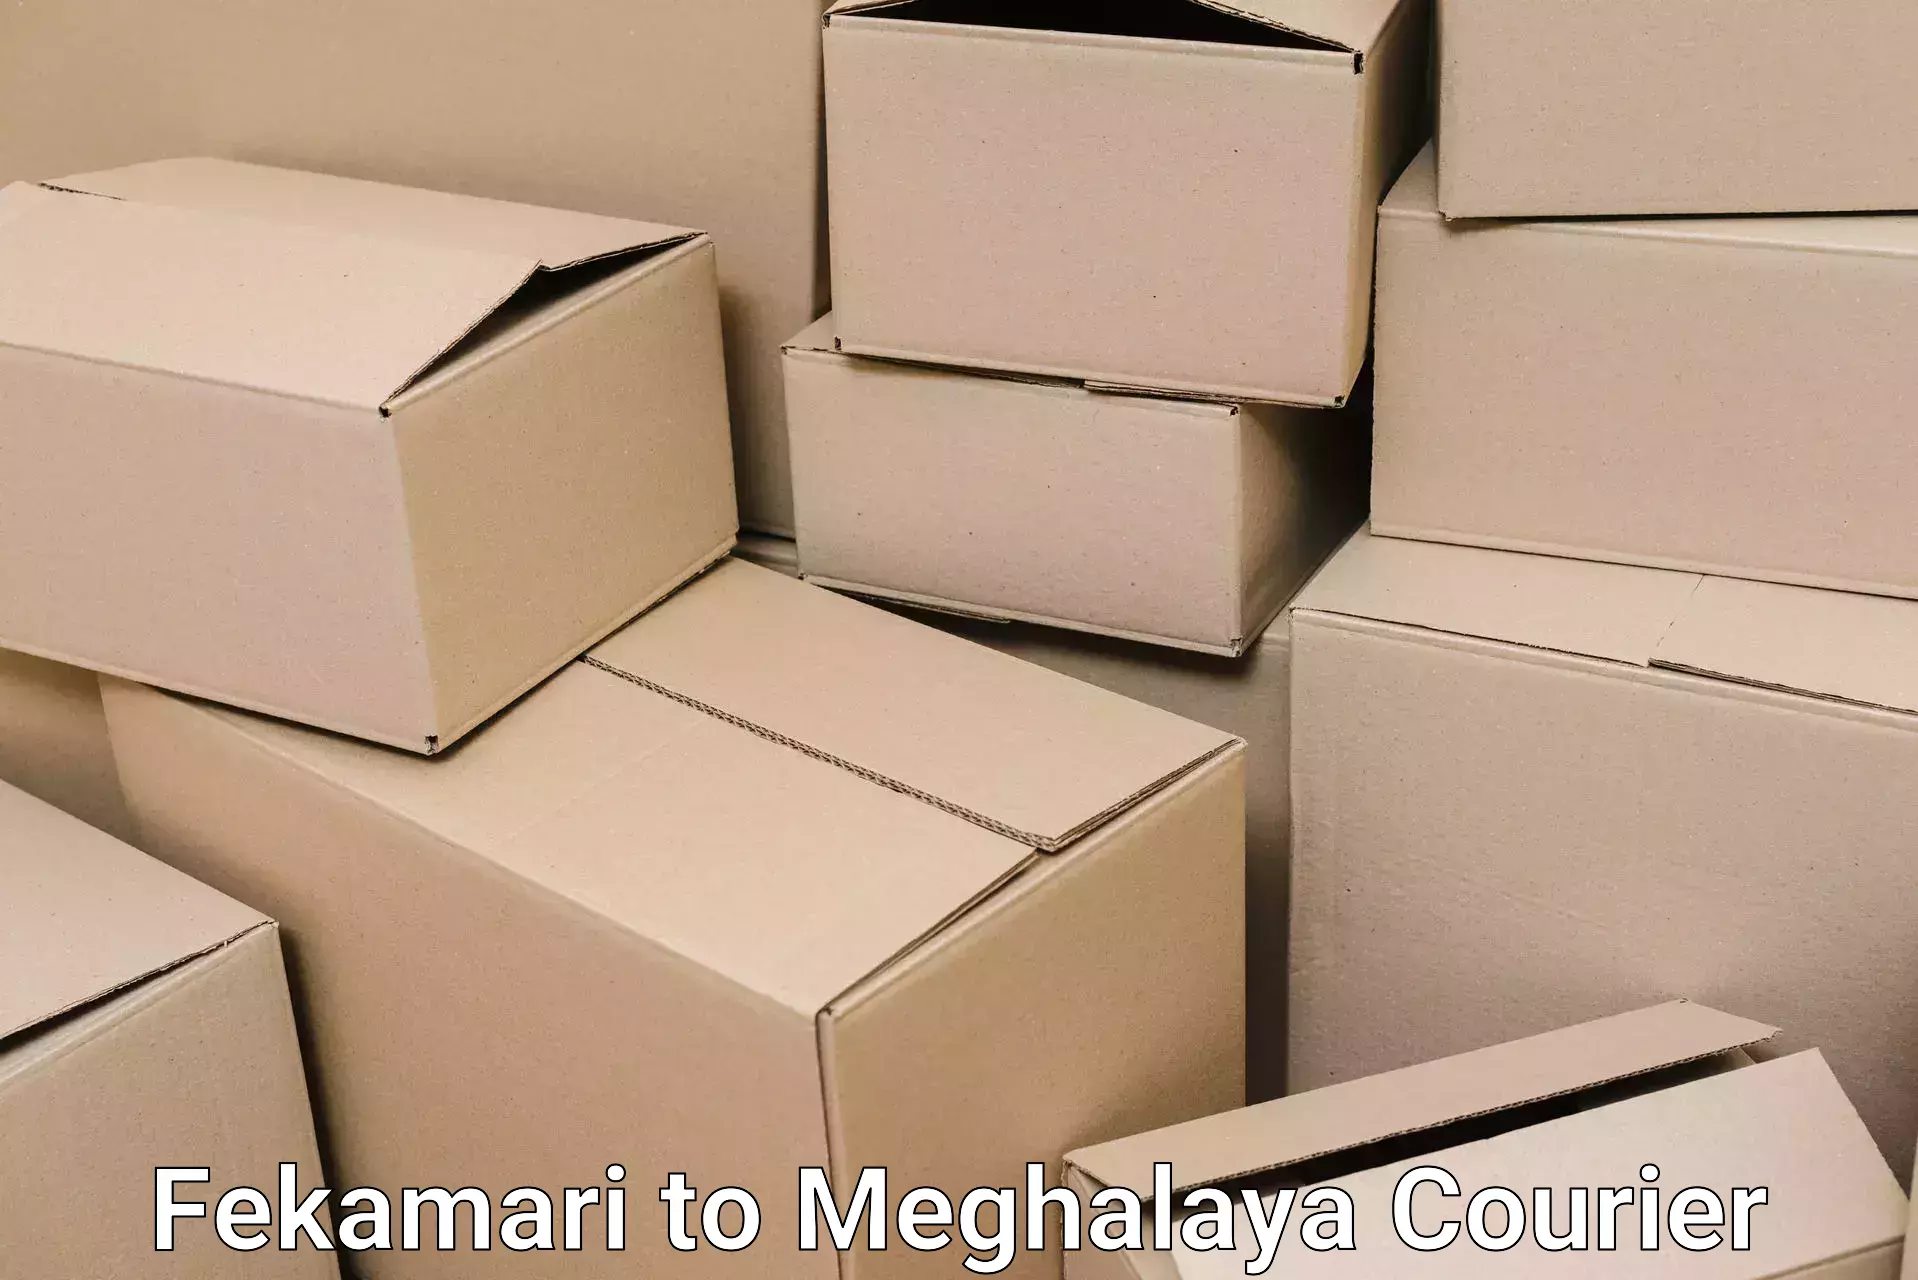 Professional moving company Fekamari to Dkhiah West